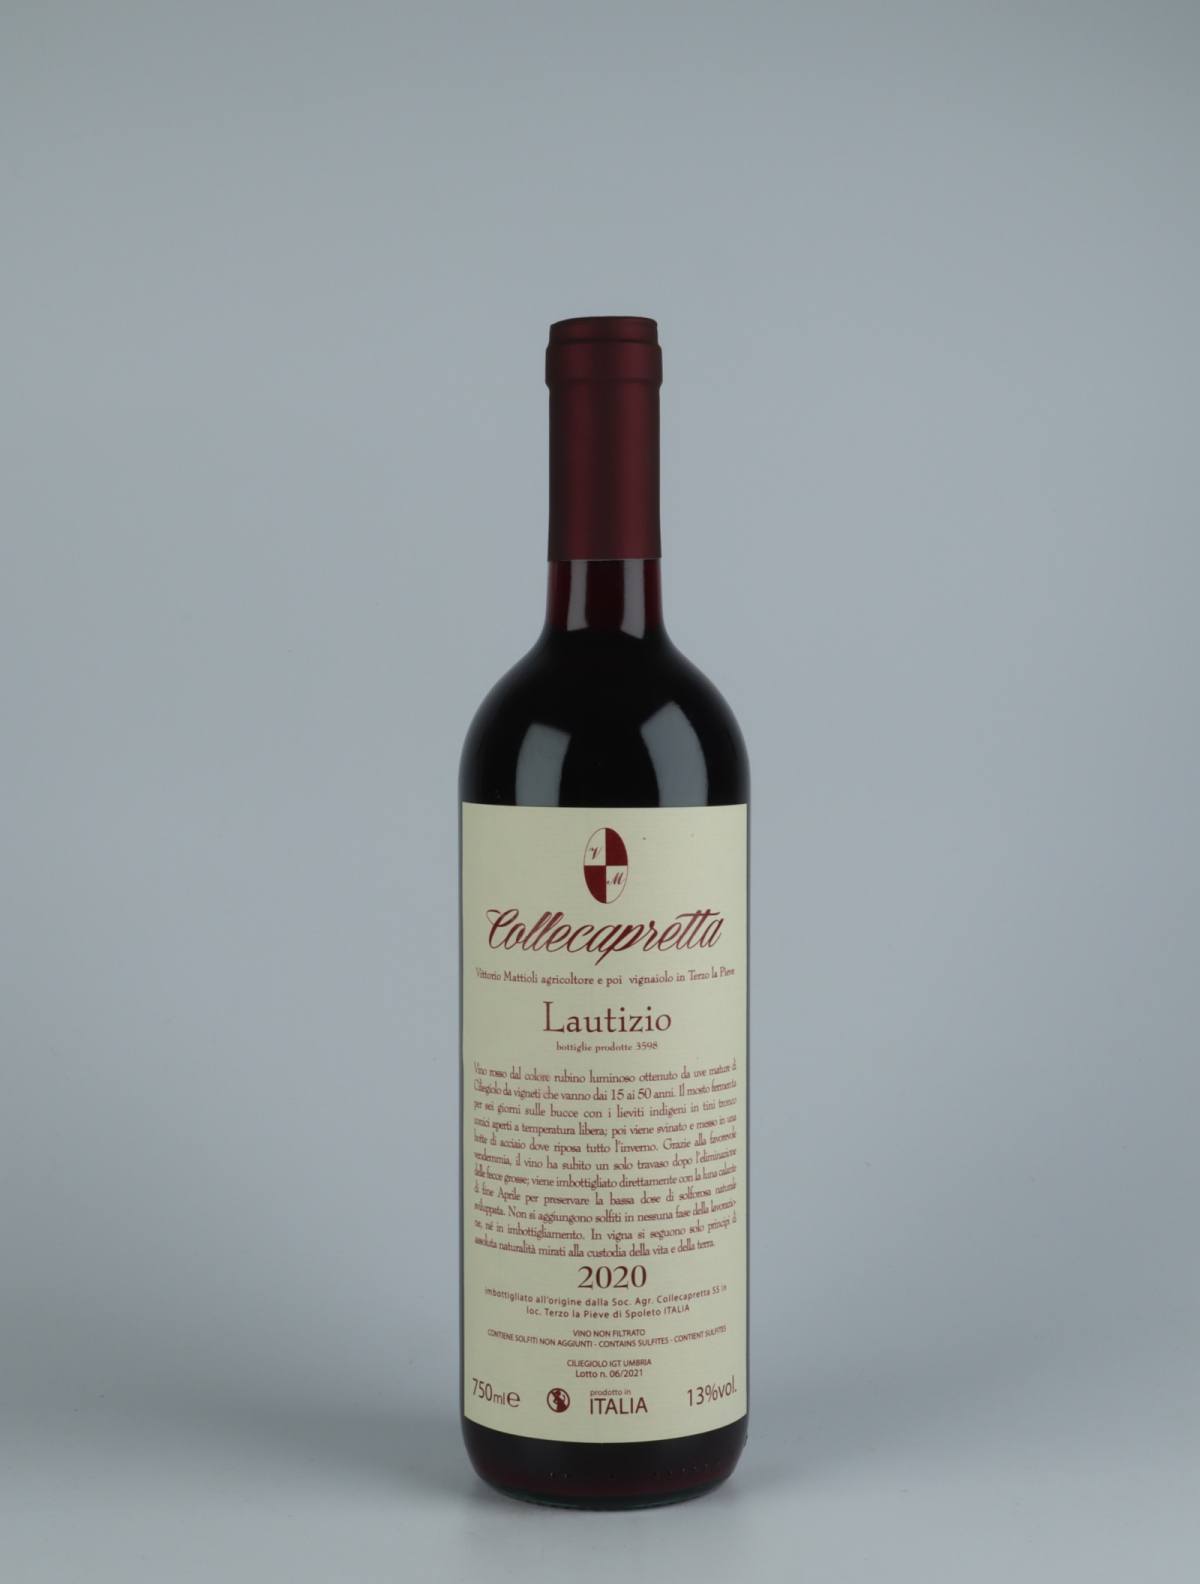 En flaske 2020 Lautizio Rødvin fra Collecapretta, Umbrien i Italien